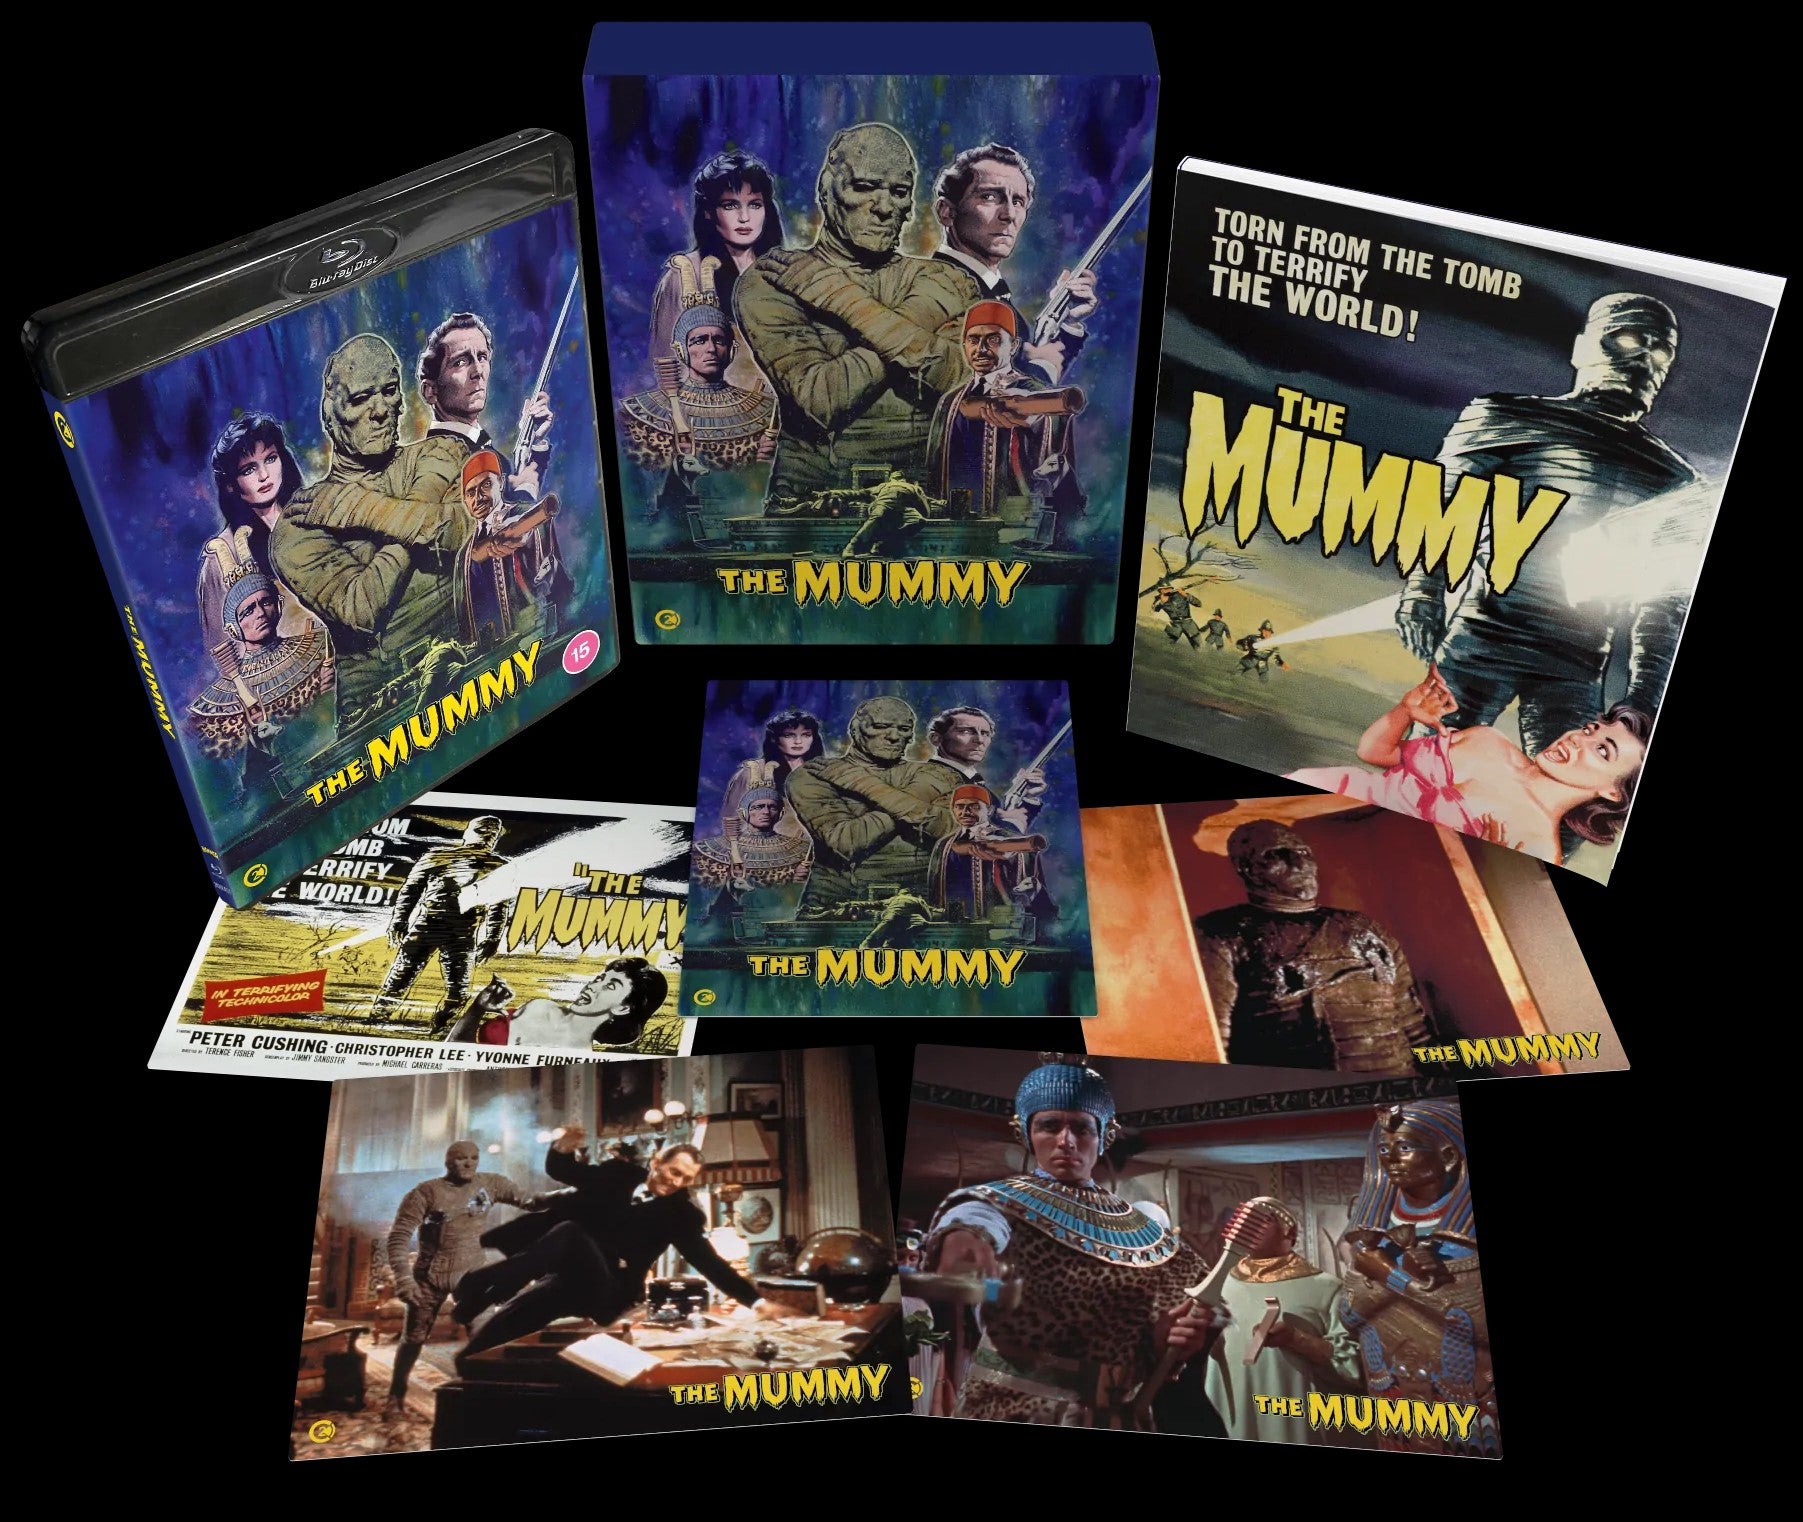 The Mummy (Limited Edition, Region B) – Orbit DVD